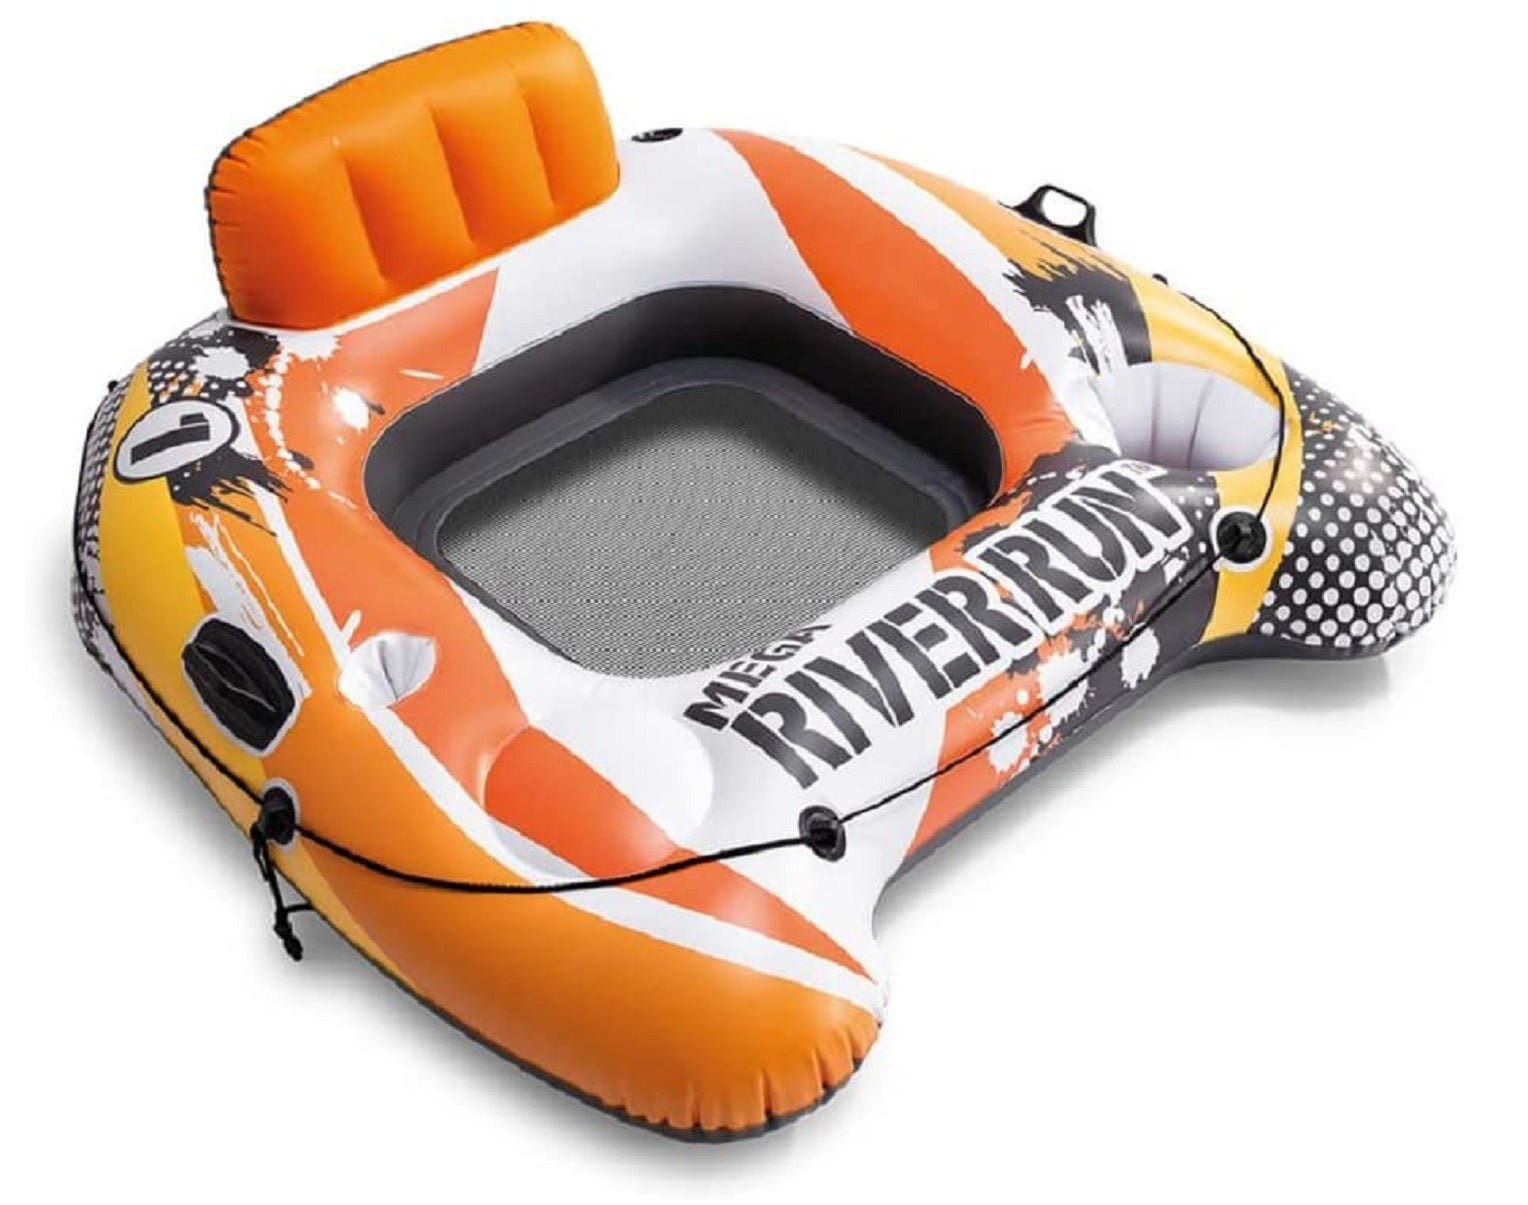 Intex Mega River Run XL Inflatable Floating Lake Tube 52inX49inX21in Orange